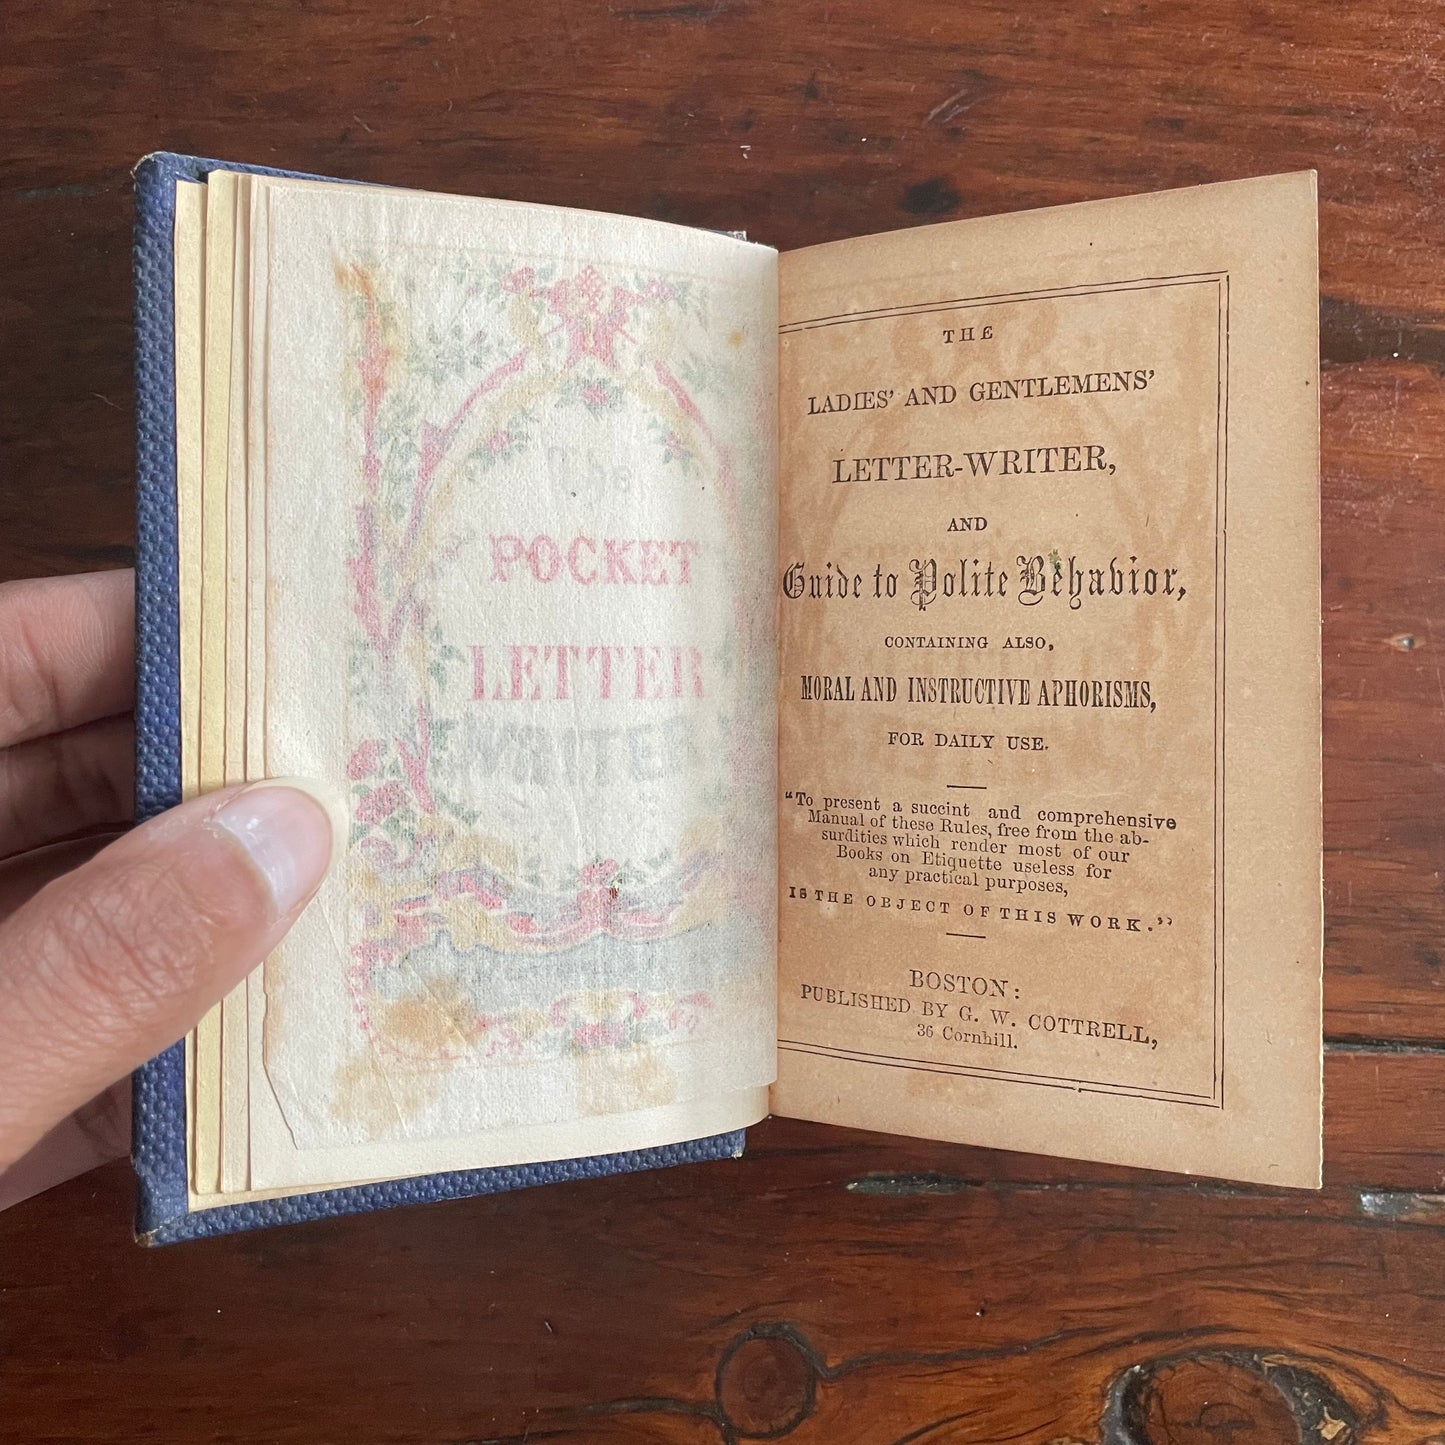 The Pocket Letter Writer - G. W. Cotterell & Co., Boston